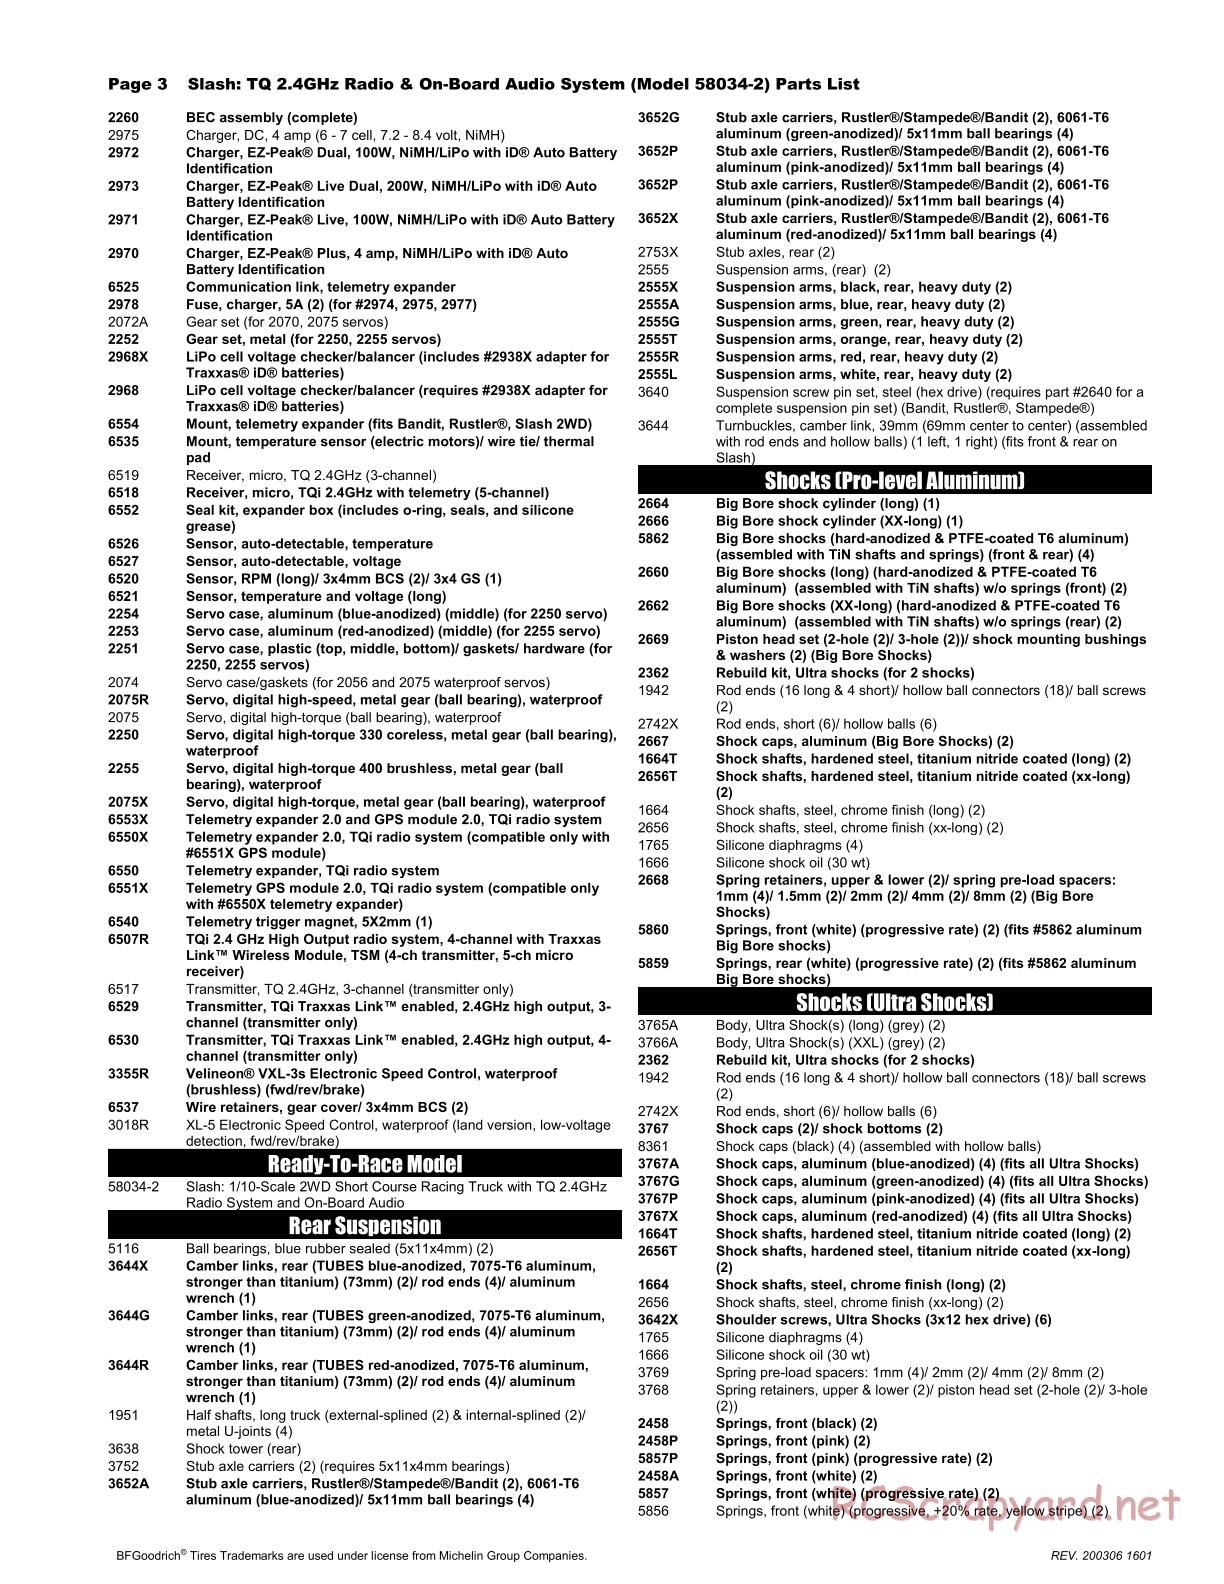 Traxxas - Slash OBA 2WD - Parts List - Page 3